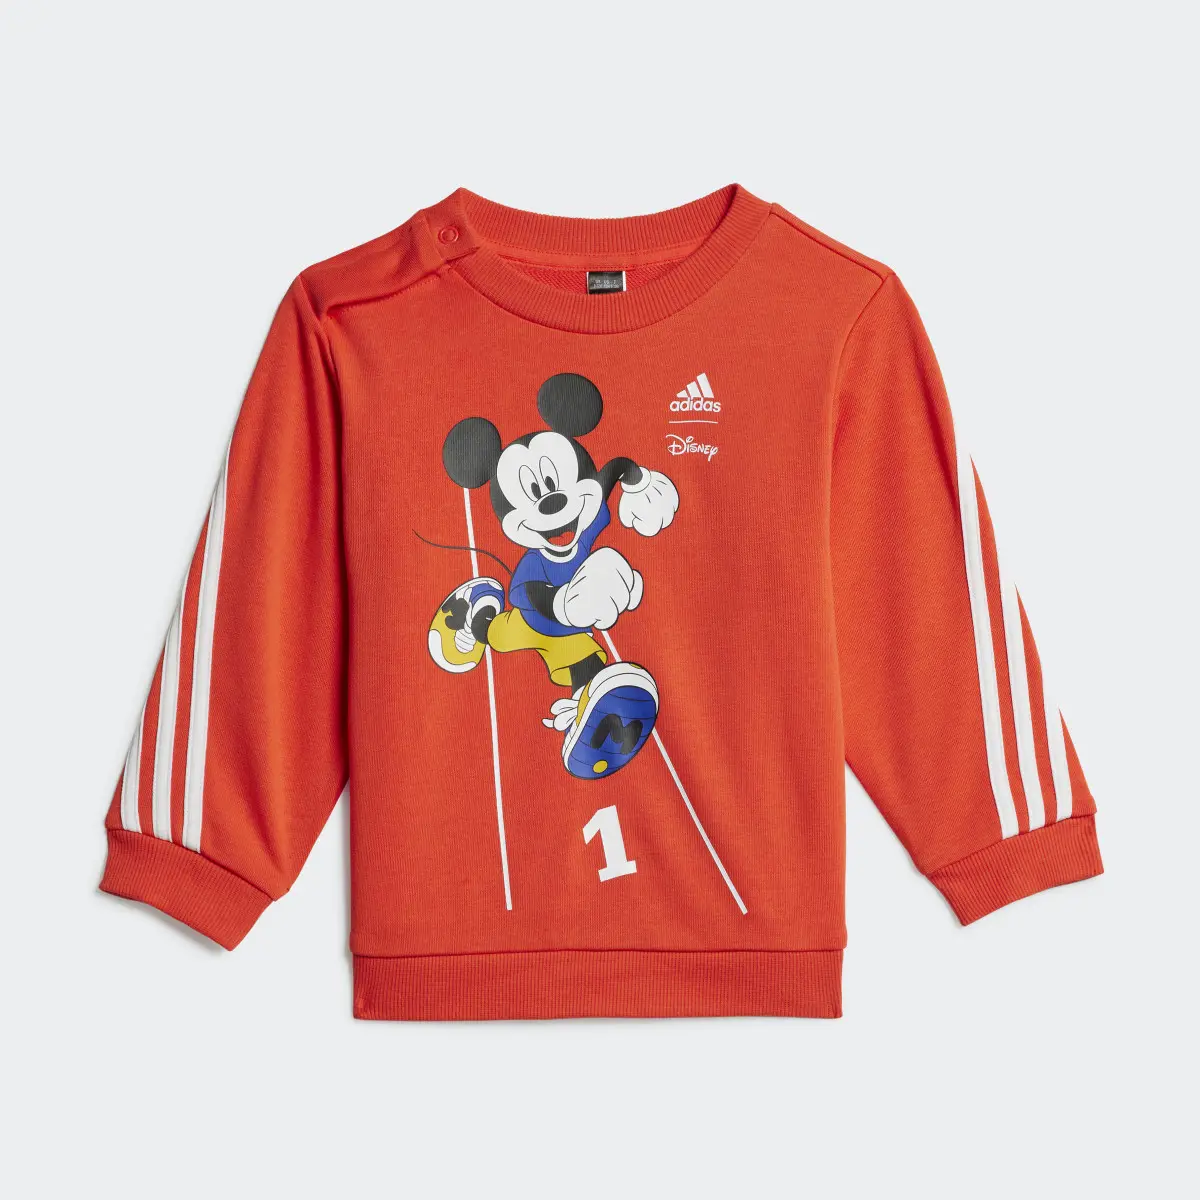 Adidas Conjunto Jogger adidas x Disney Mickey Mouse. 3